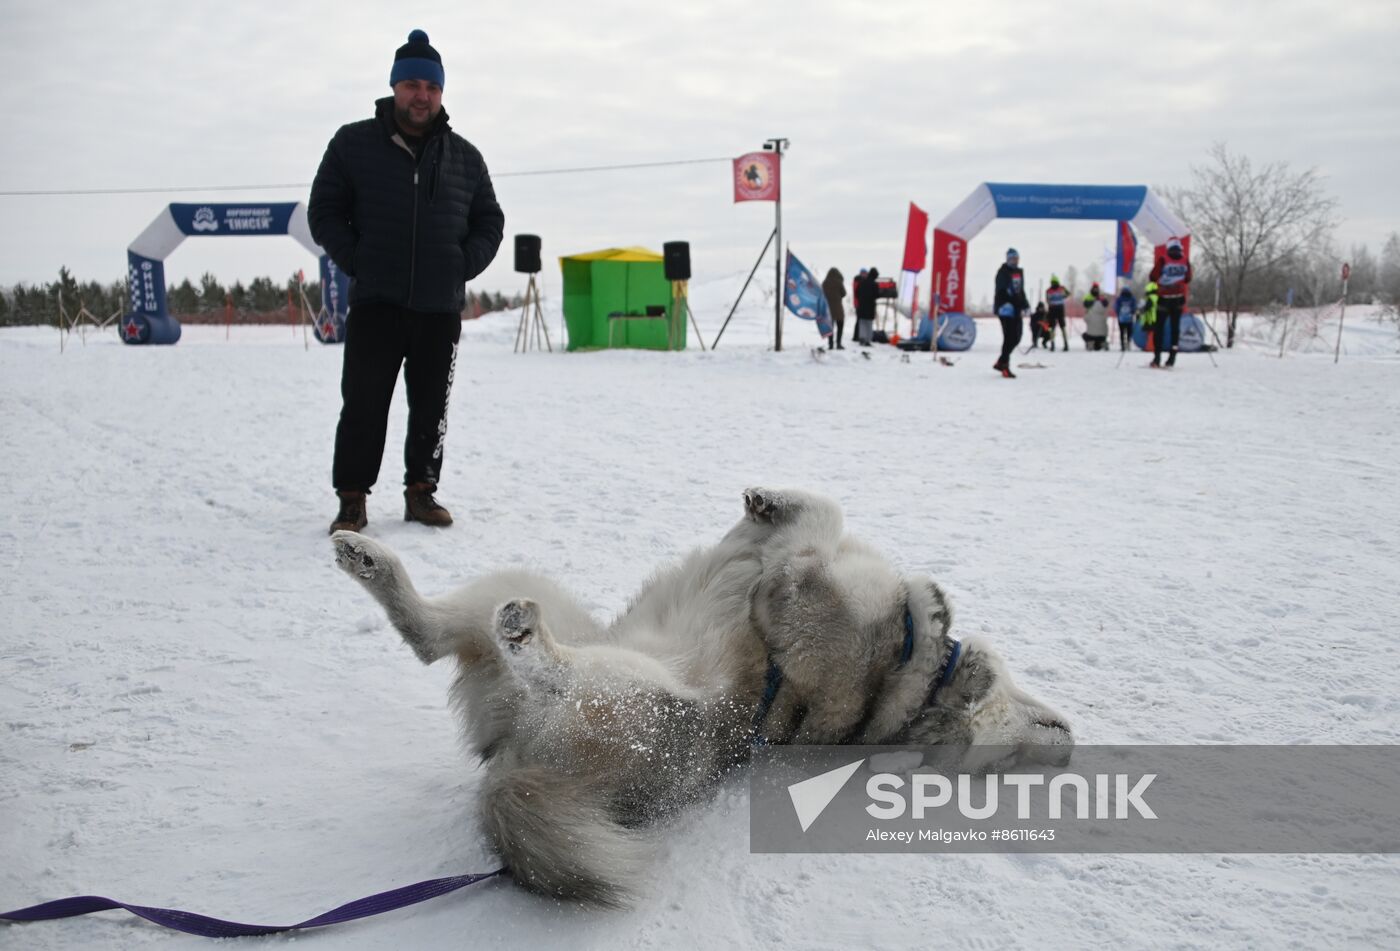 Russia Sled Dog Racing Tournament